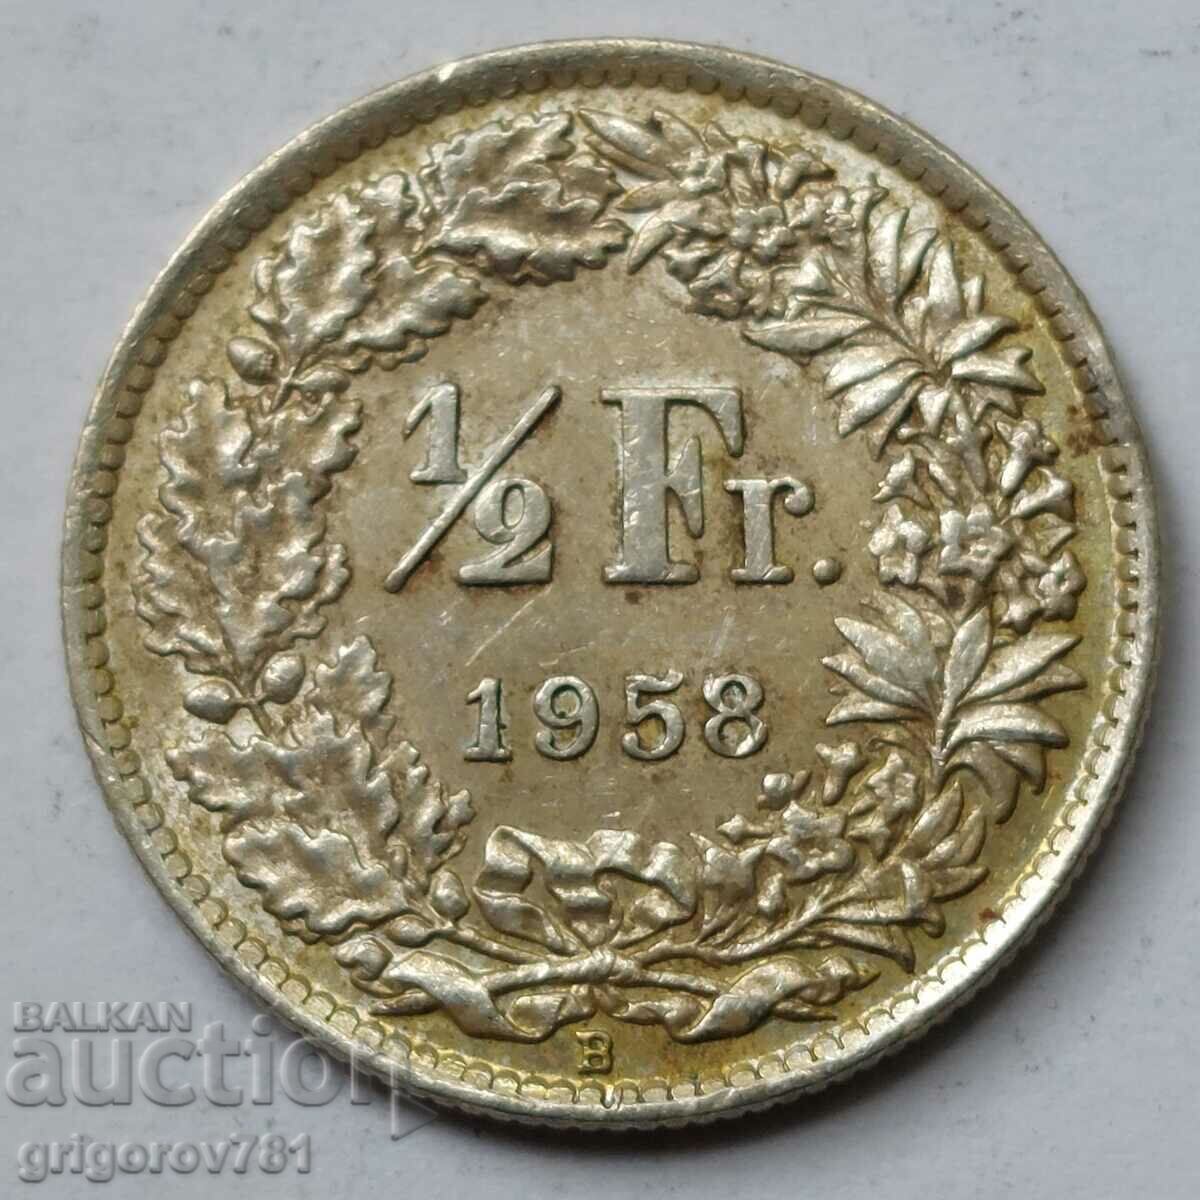 1/2 Franc Silver Switzerland 1958 B - Silver Coin #33